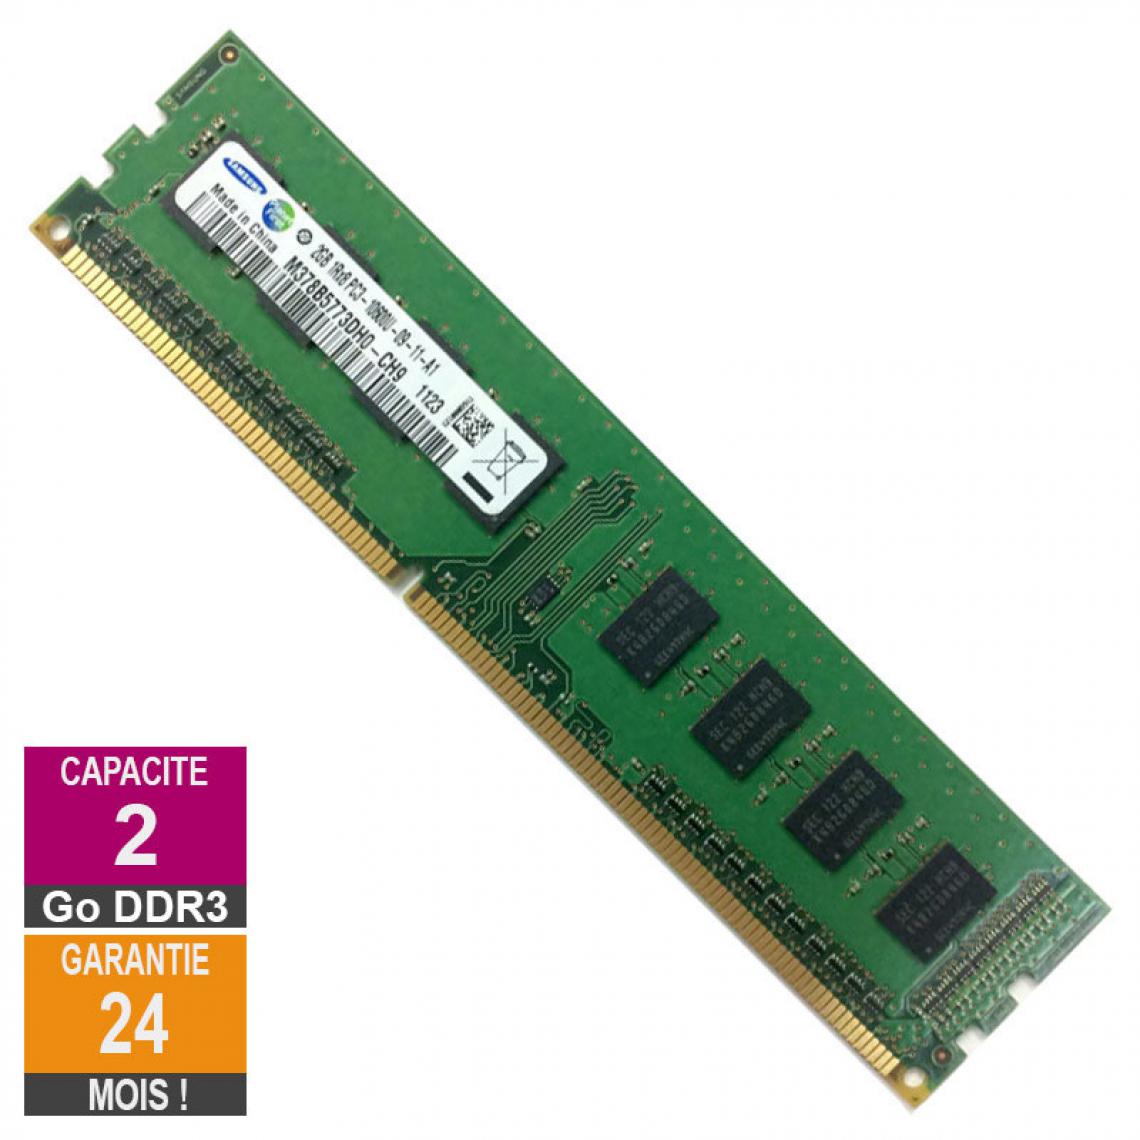 Samsung - Barrette Mémoire 2Go RAM DDR3 Samsung M378B5773DH0-CH9 PC3-10600U 1333MHz 1Rx8 - RAM PC Fixe